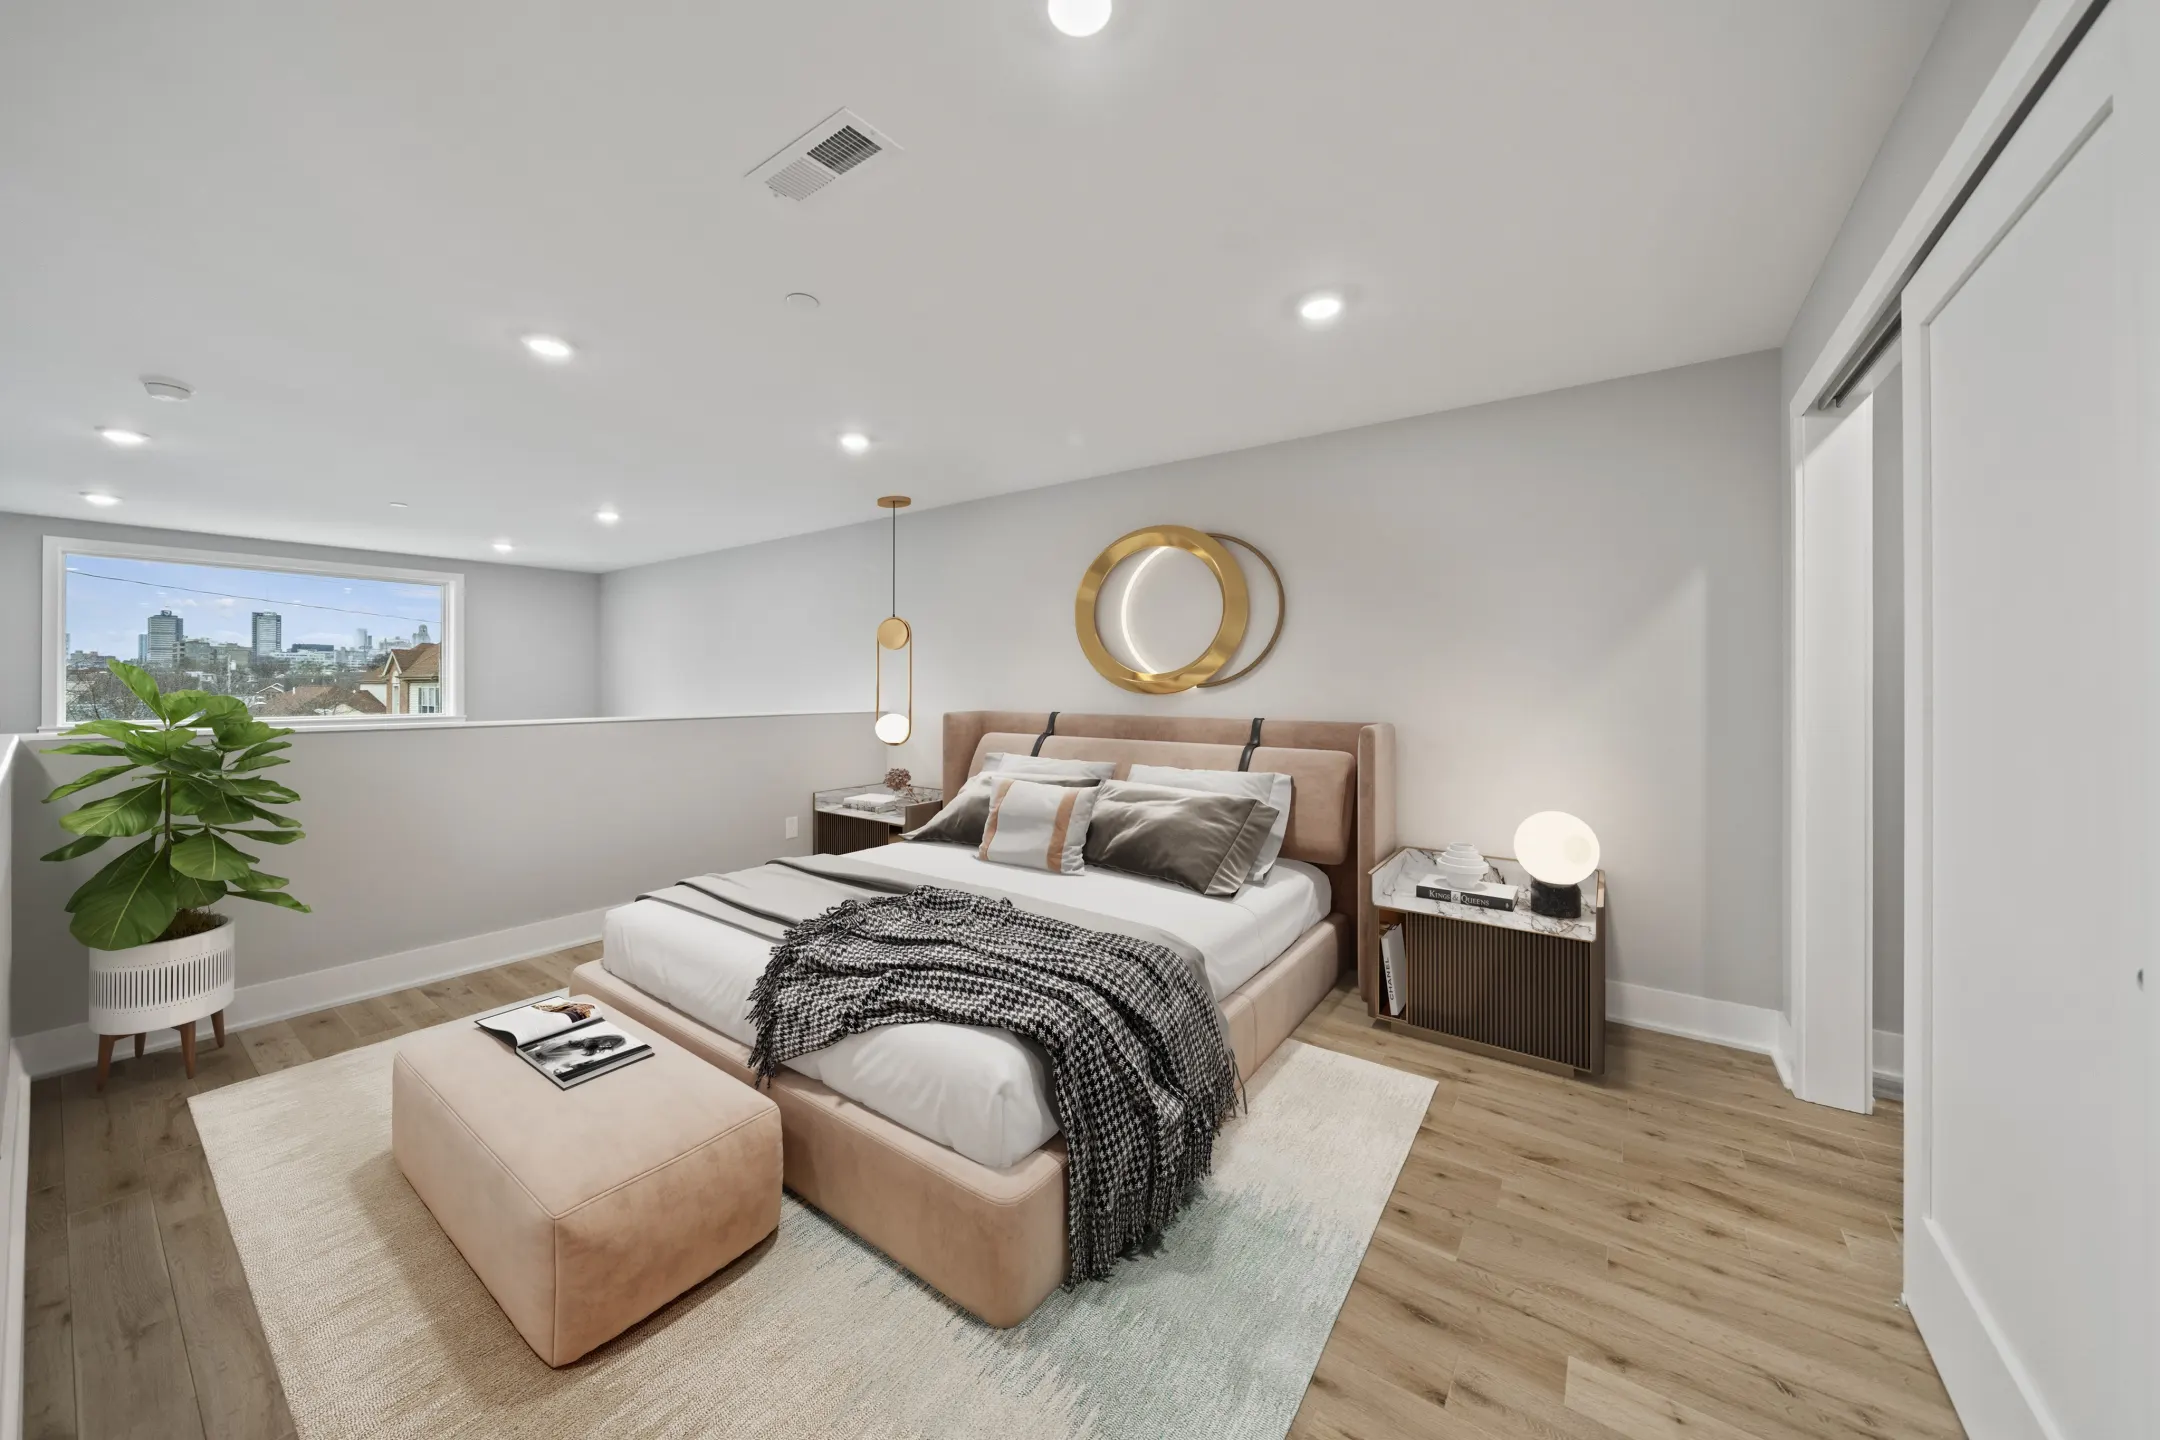 Bedroom - Veranda Apartments - Philadelphia, PA